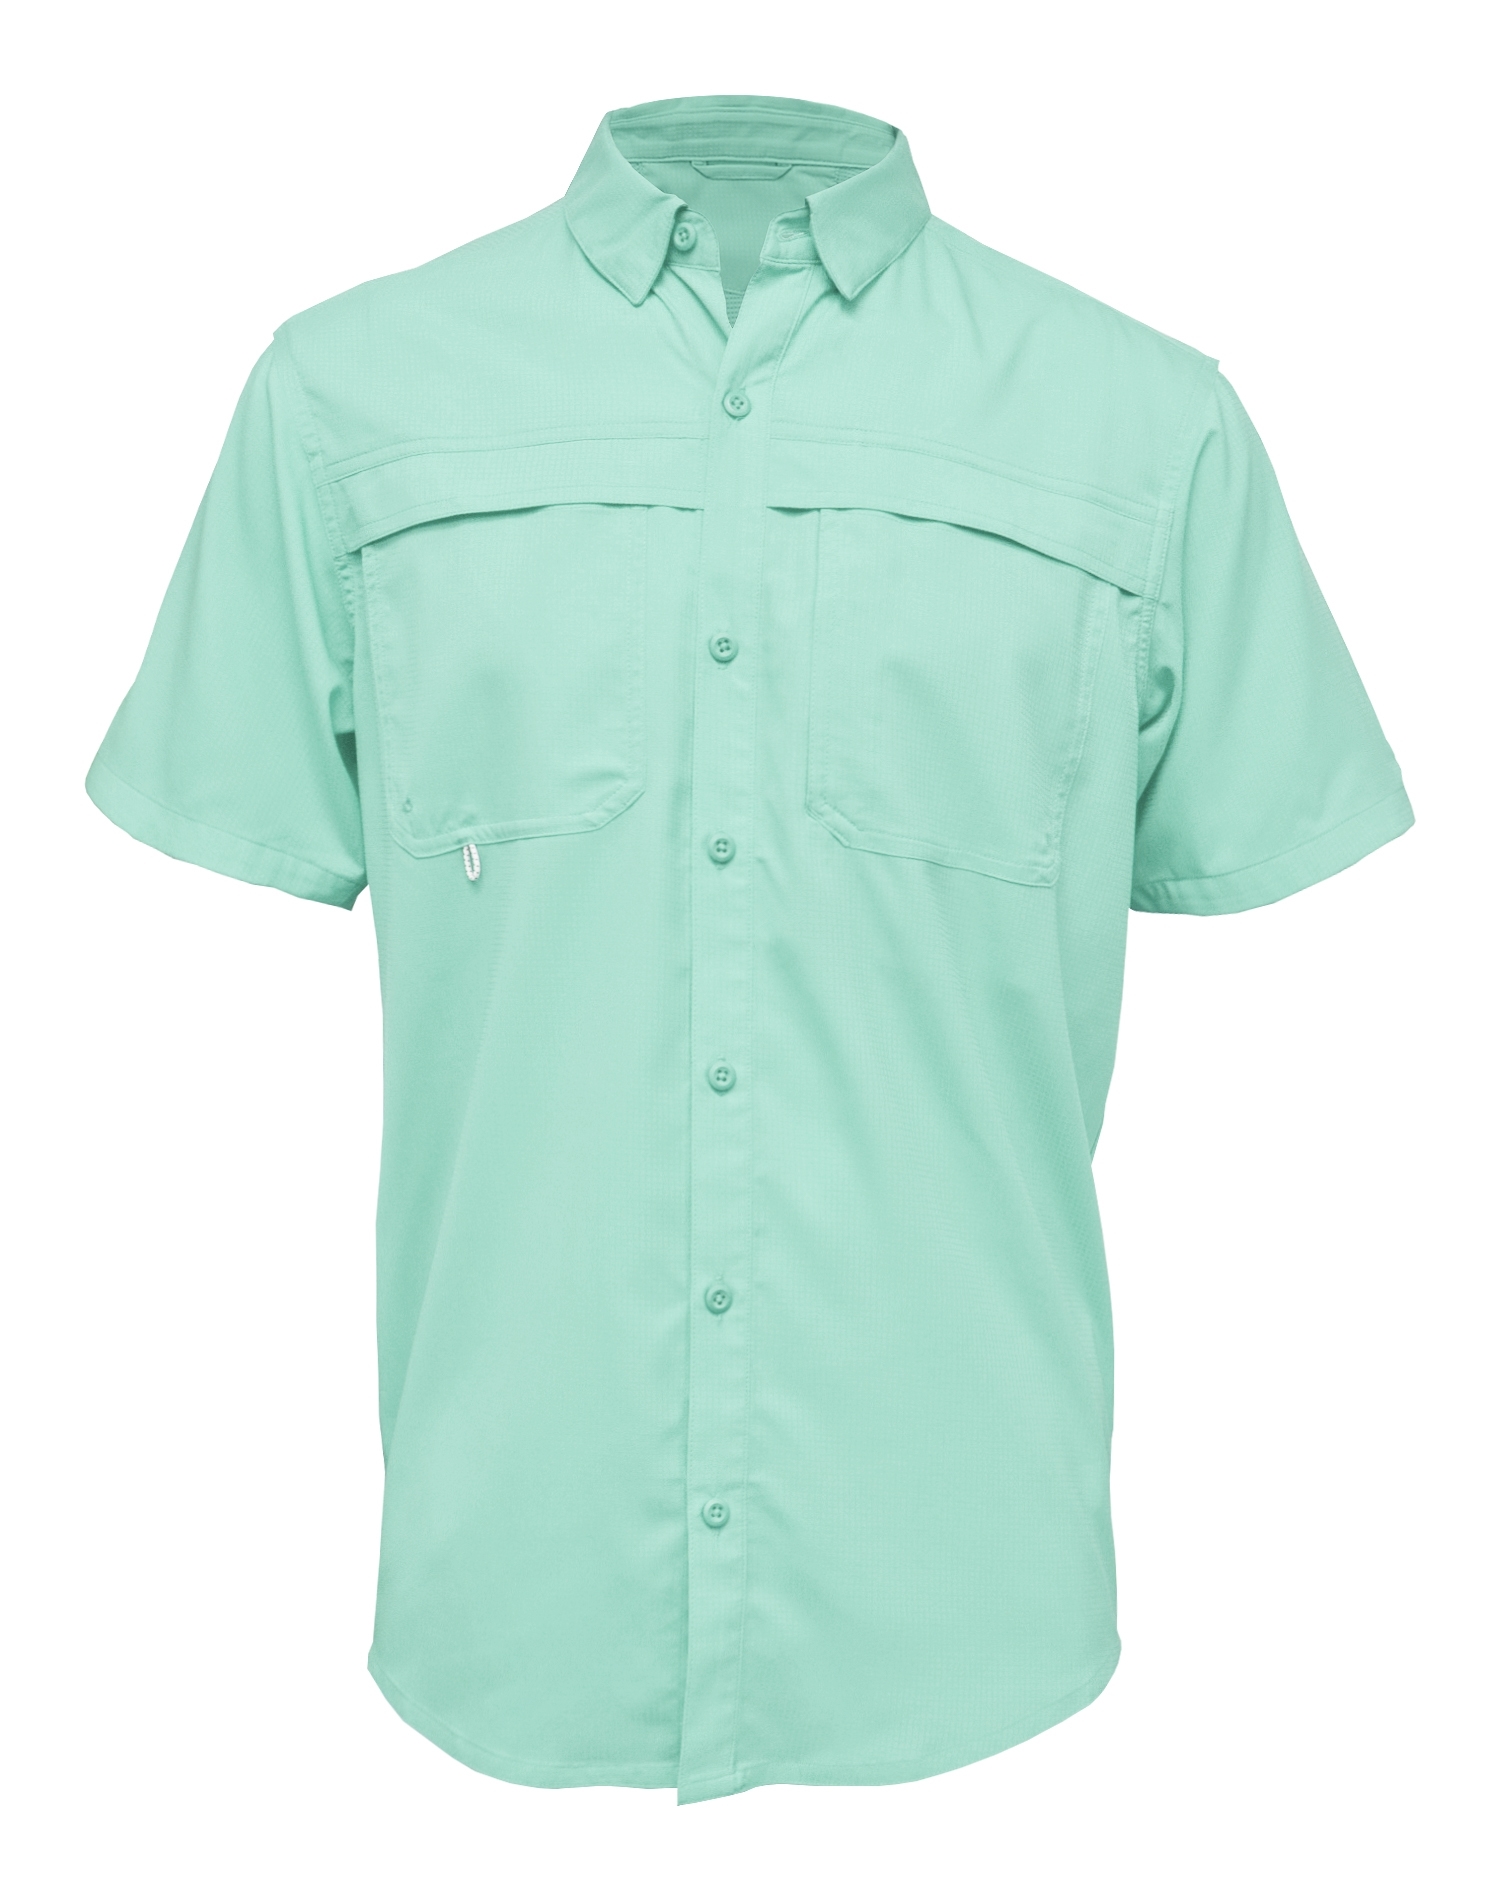 BAW Athletic Wear 3100 - Adult Short Sleeve Fishing Shirt $23.10 -  Woven/Dress Shirts